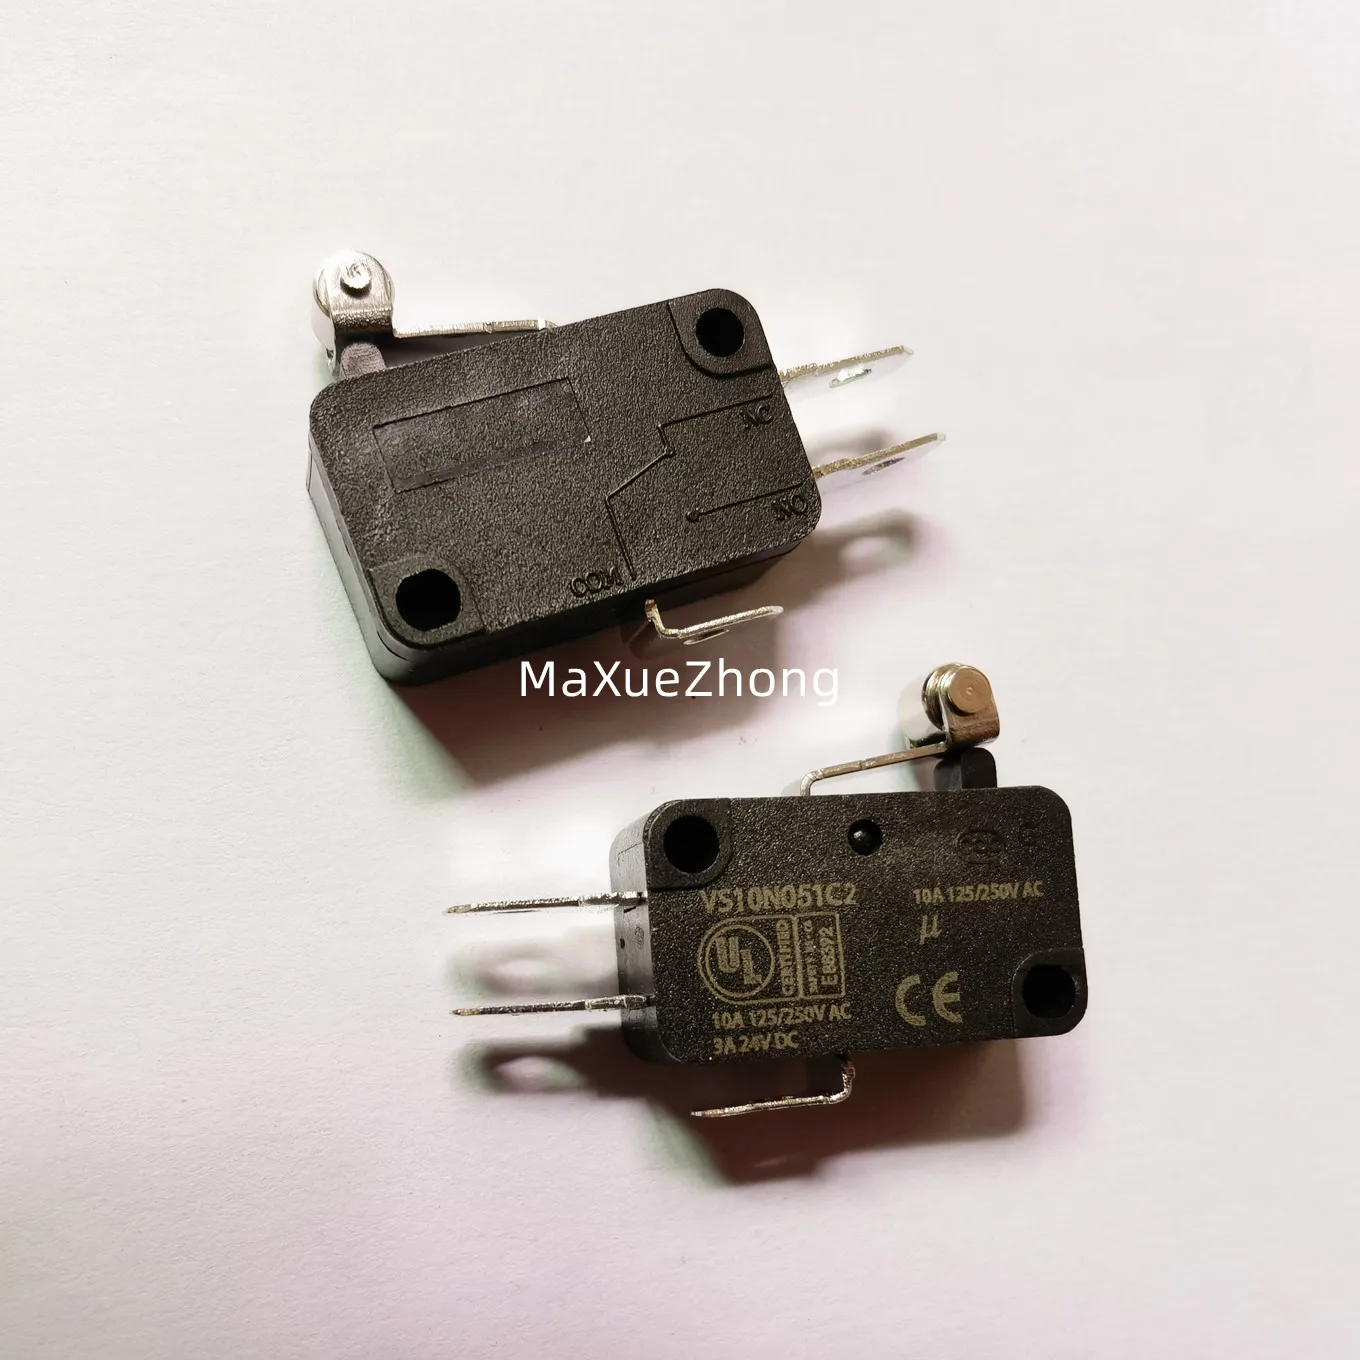 

Original new 100% VS10N051C2 10A 125/250VAC short handle pulley limit switch